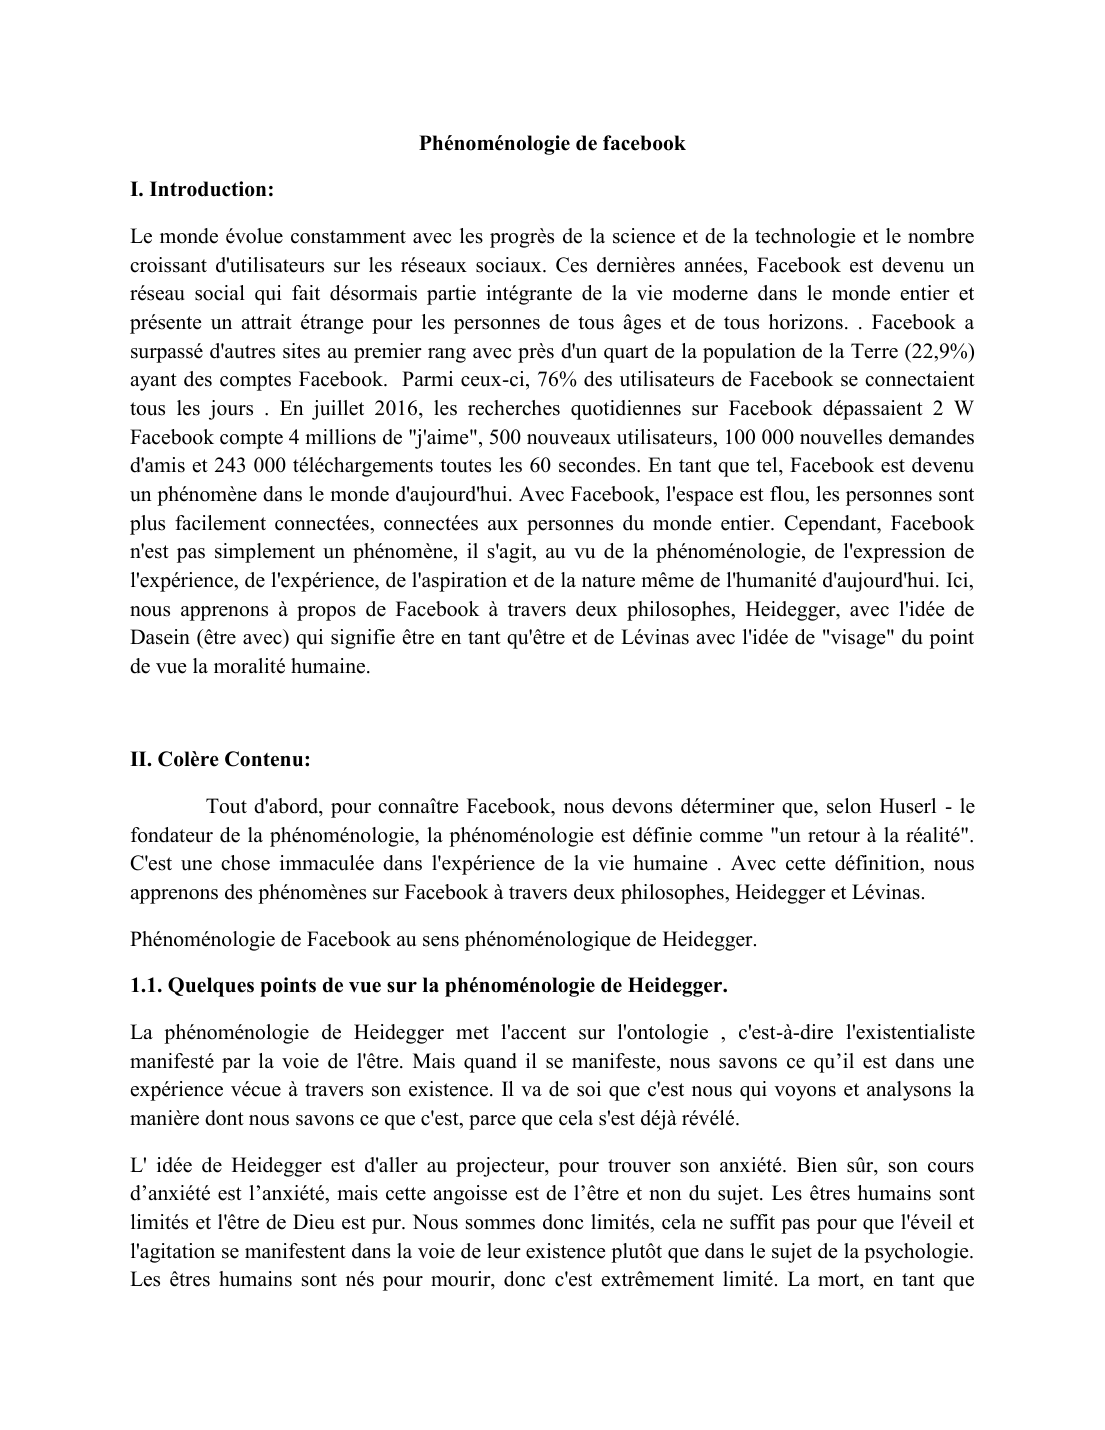 Prévisualisation du document Phénoménologie de facebookI.